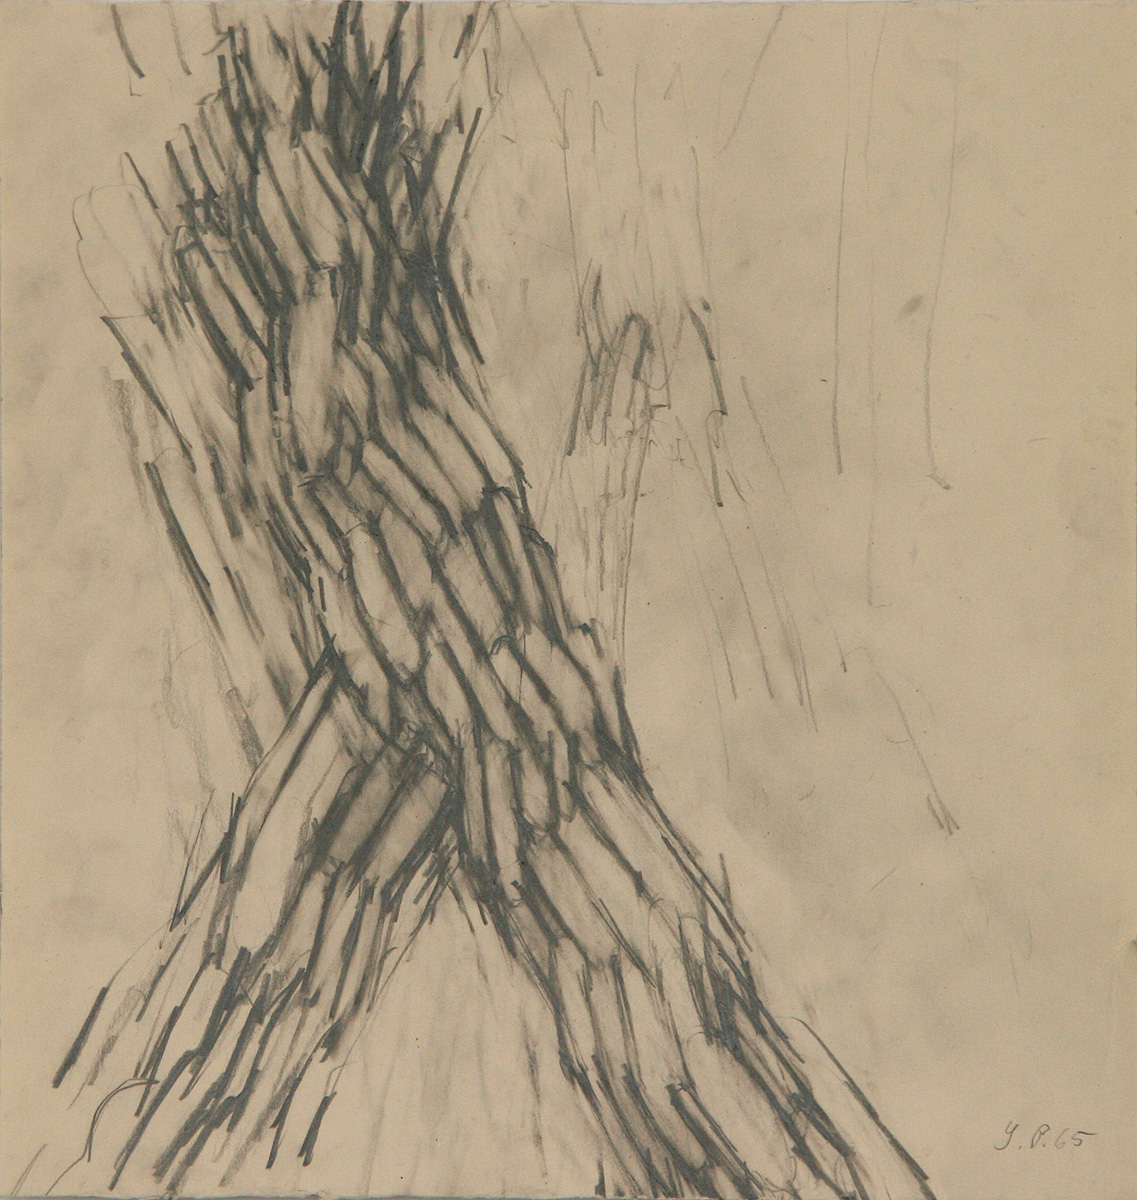 Walkding Torso, 196531,5 x 30 cmPencil on paper